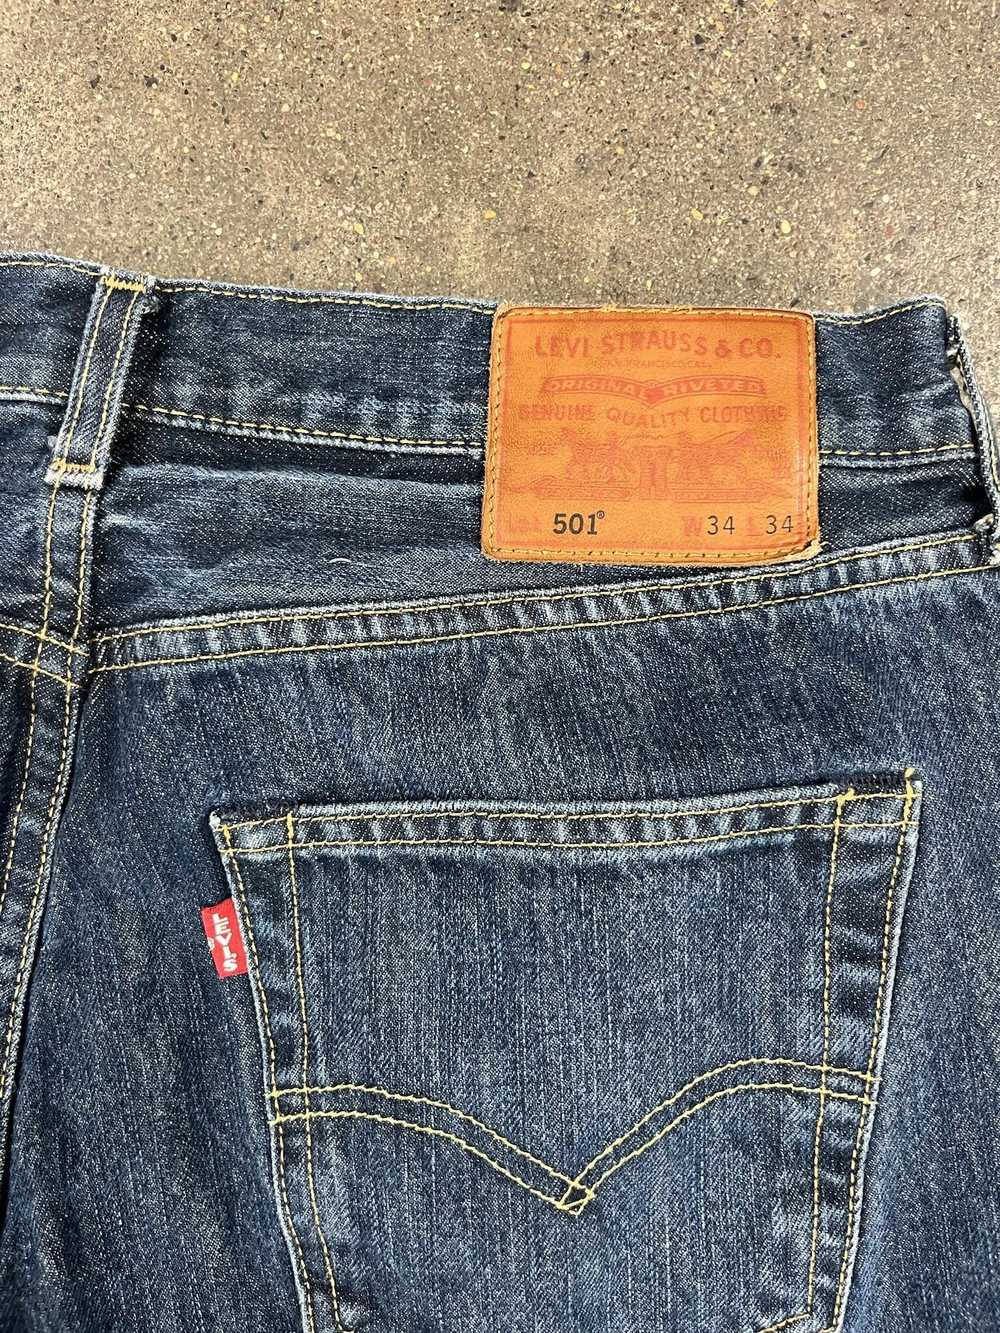 Streetwear × Vintage Levis LVC 501 Slim Fit Jeans - image 4